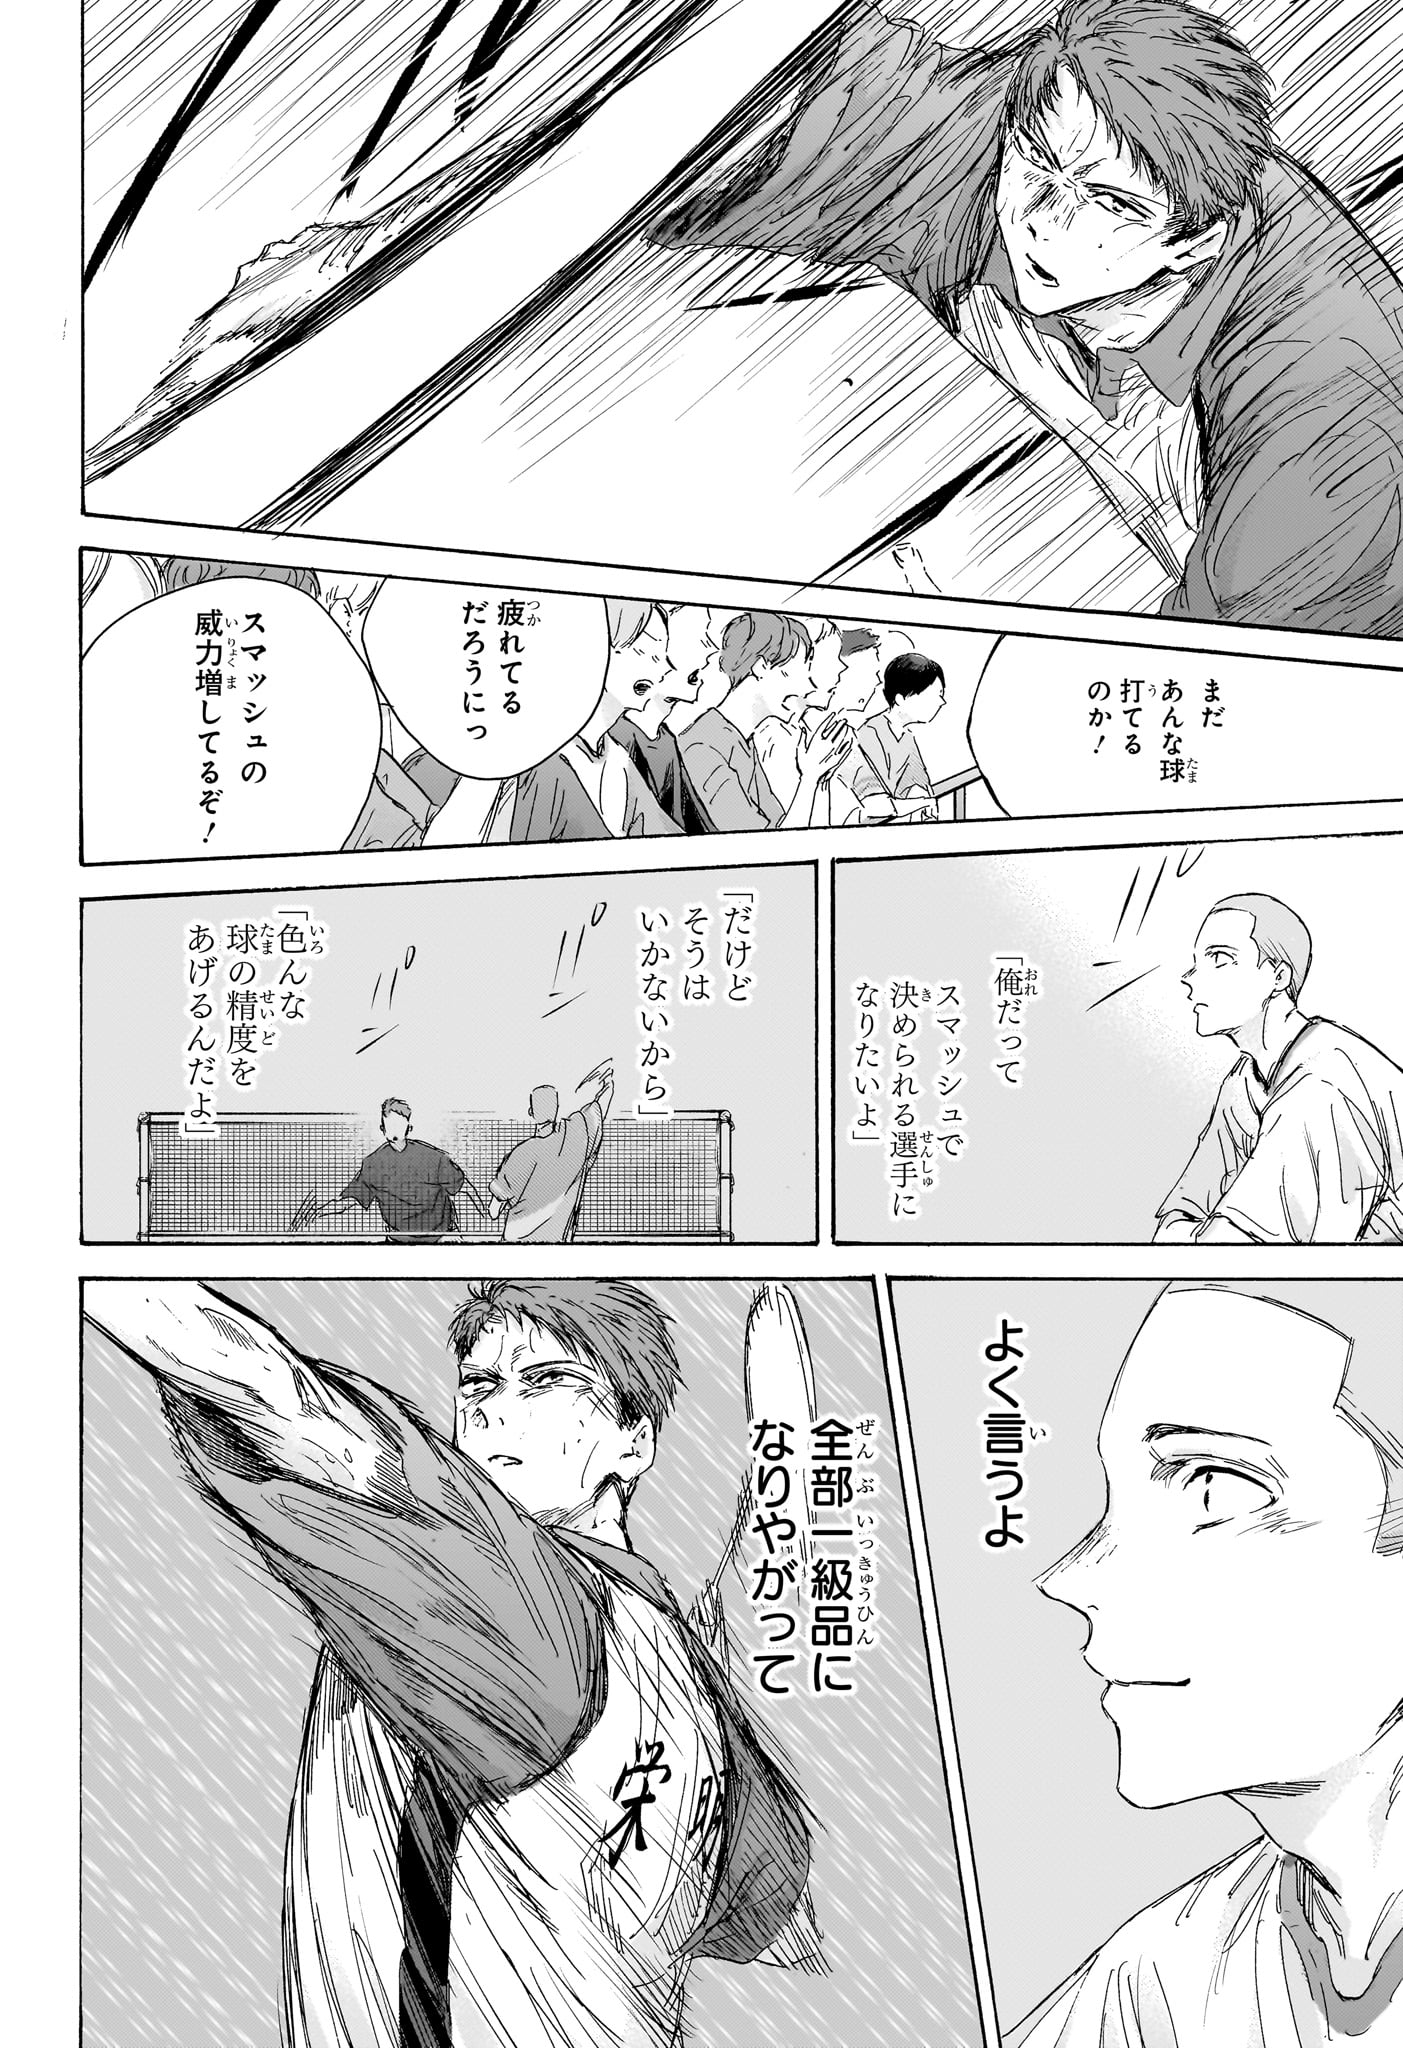 Ao no Hako - Chapter 142 - Page 2